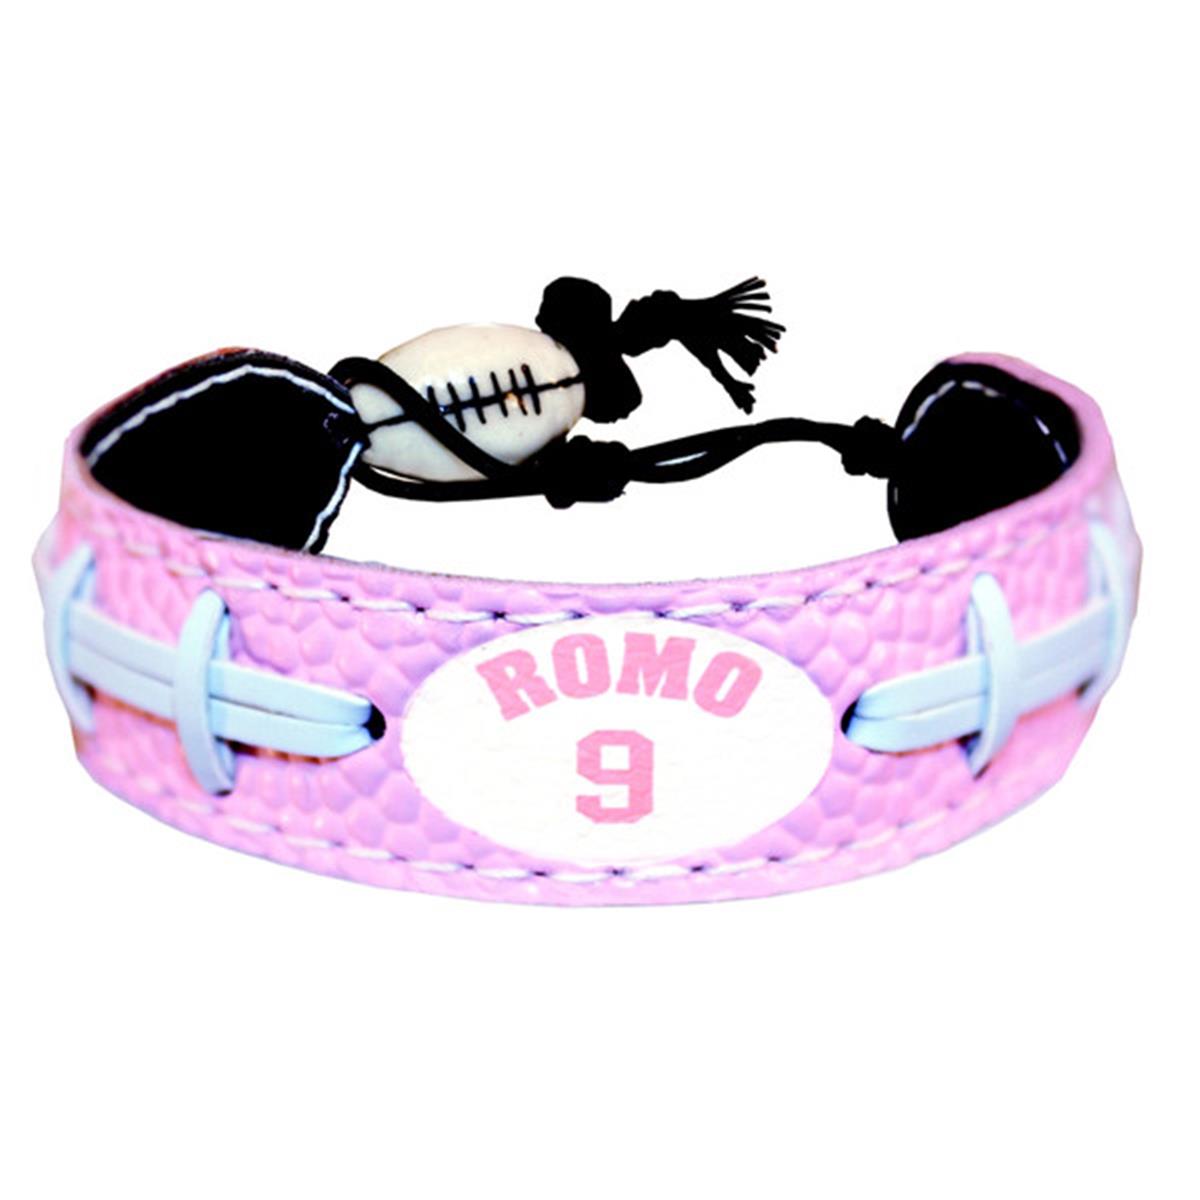 Picture of Dallas Cowboys Bracelet Pink Jersey Tony Romo Design